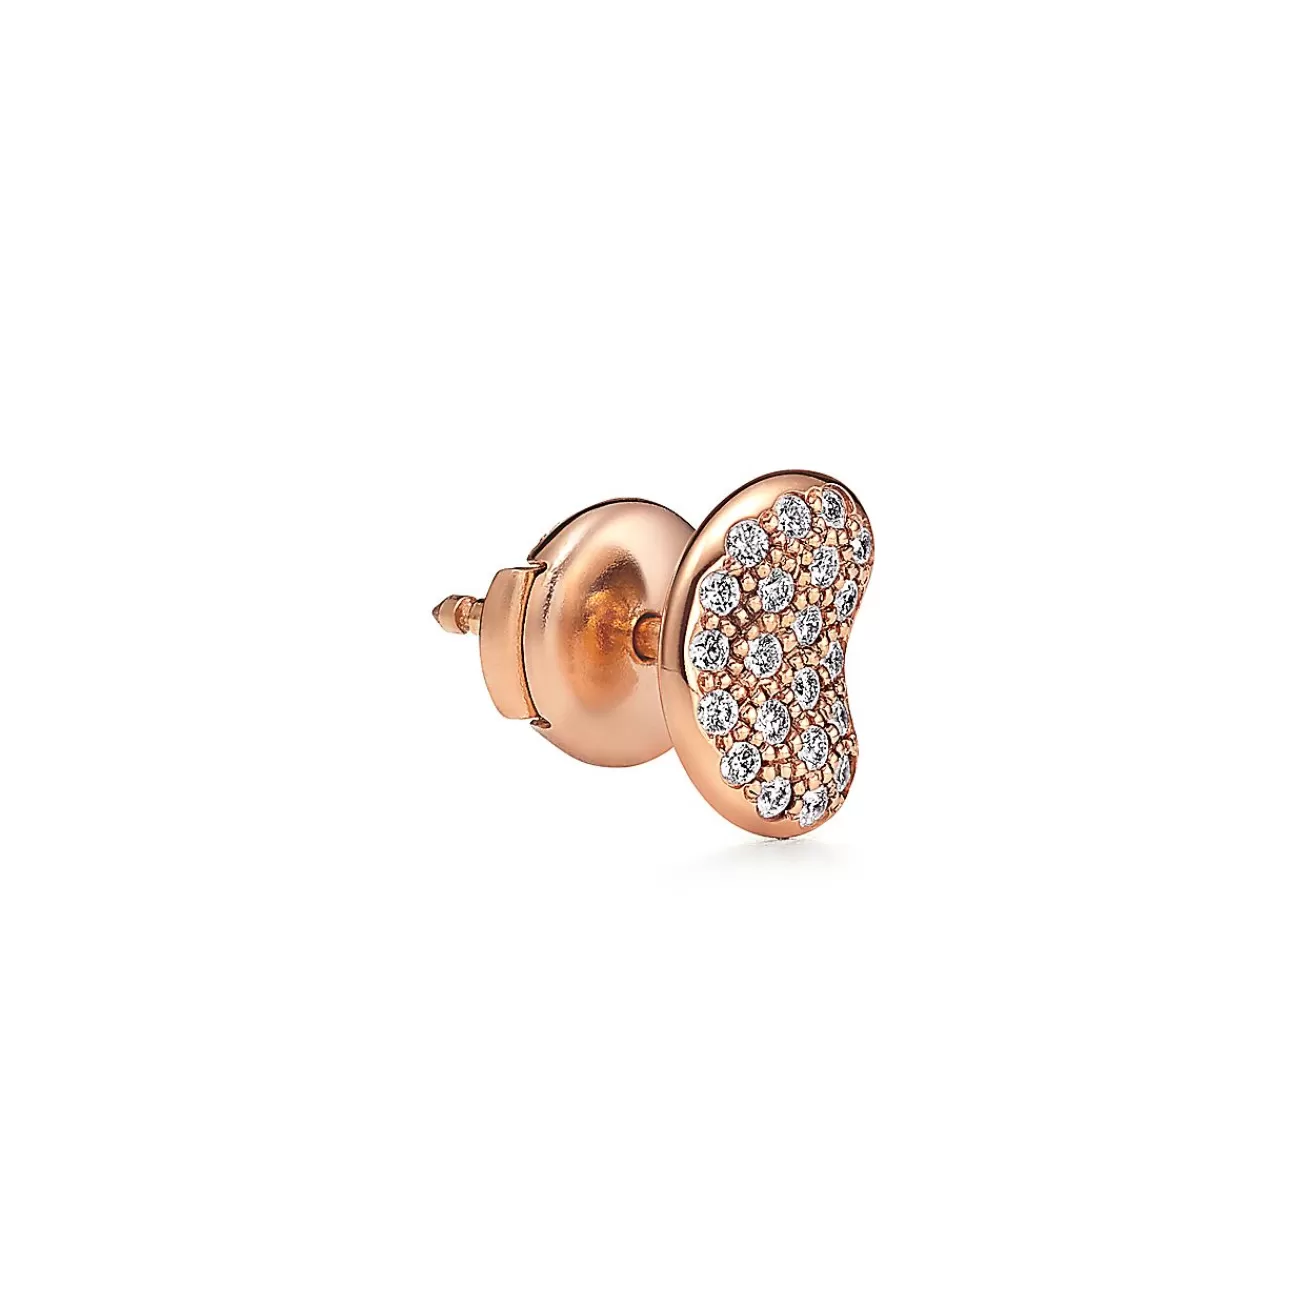 Tiffany & Co. Elsa Peretti® Bean® design Earrings in Rose Gold with Diamonds, 9 mm | ^ Earrings | Rose Gold Jewelry